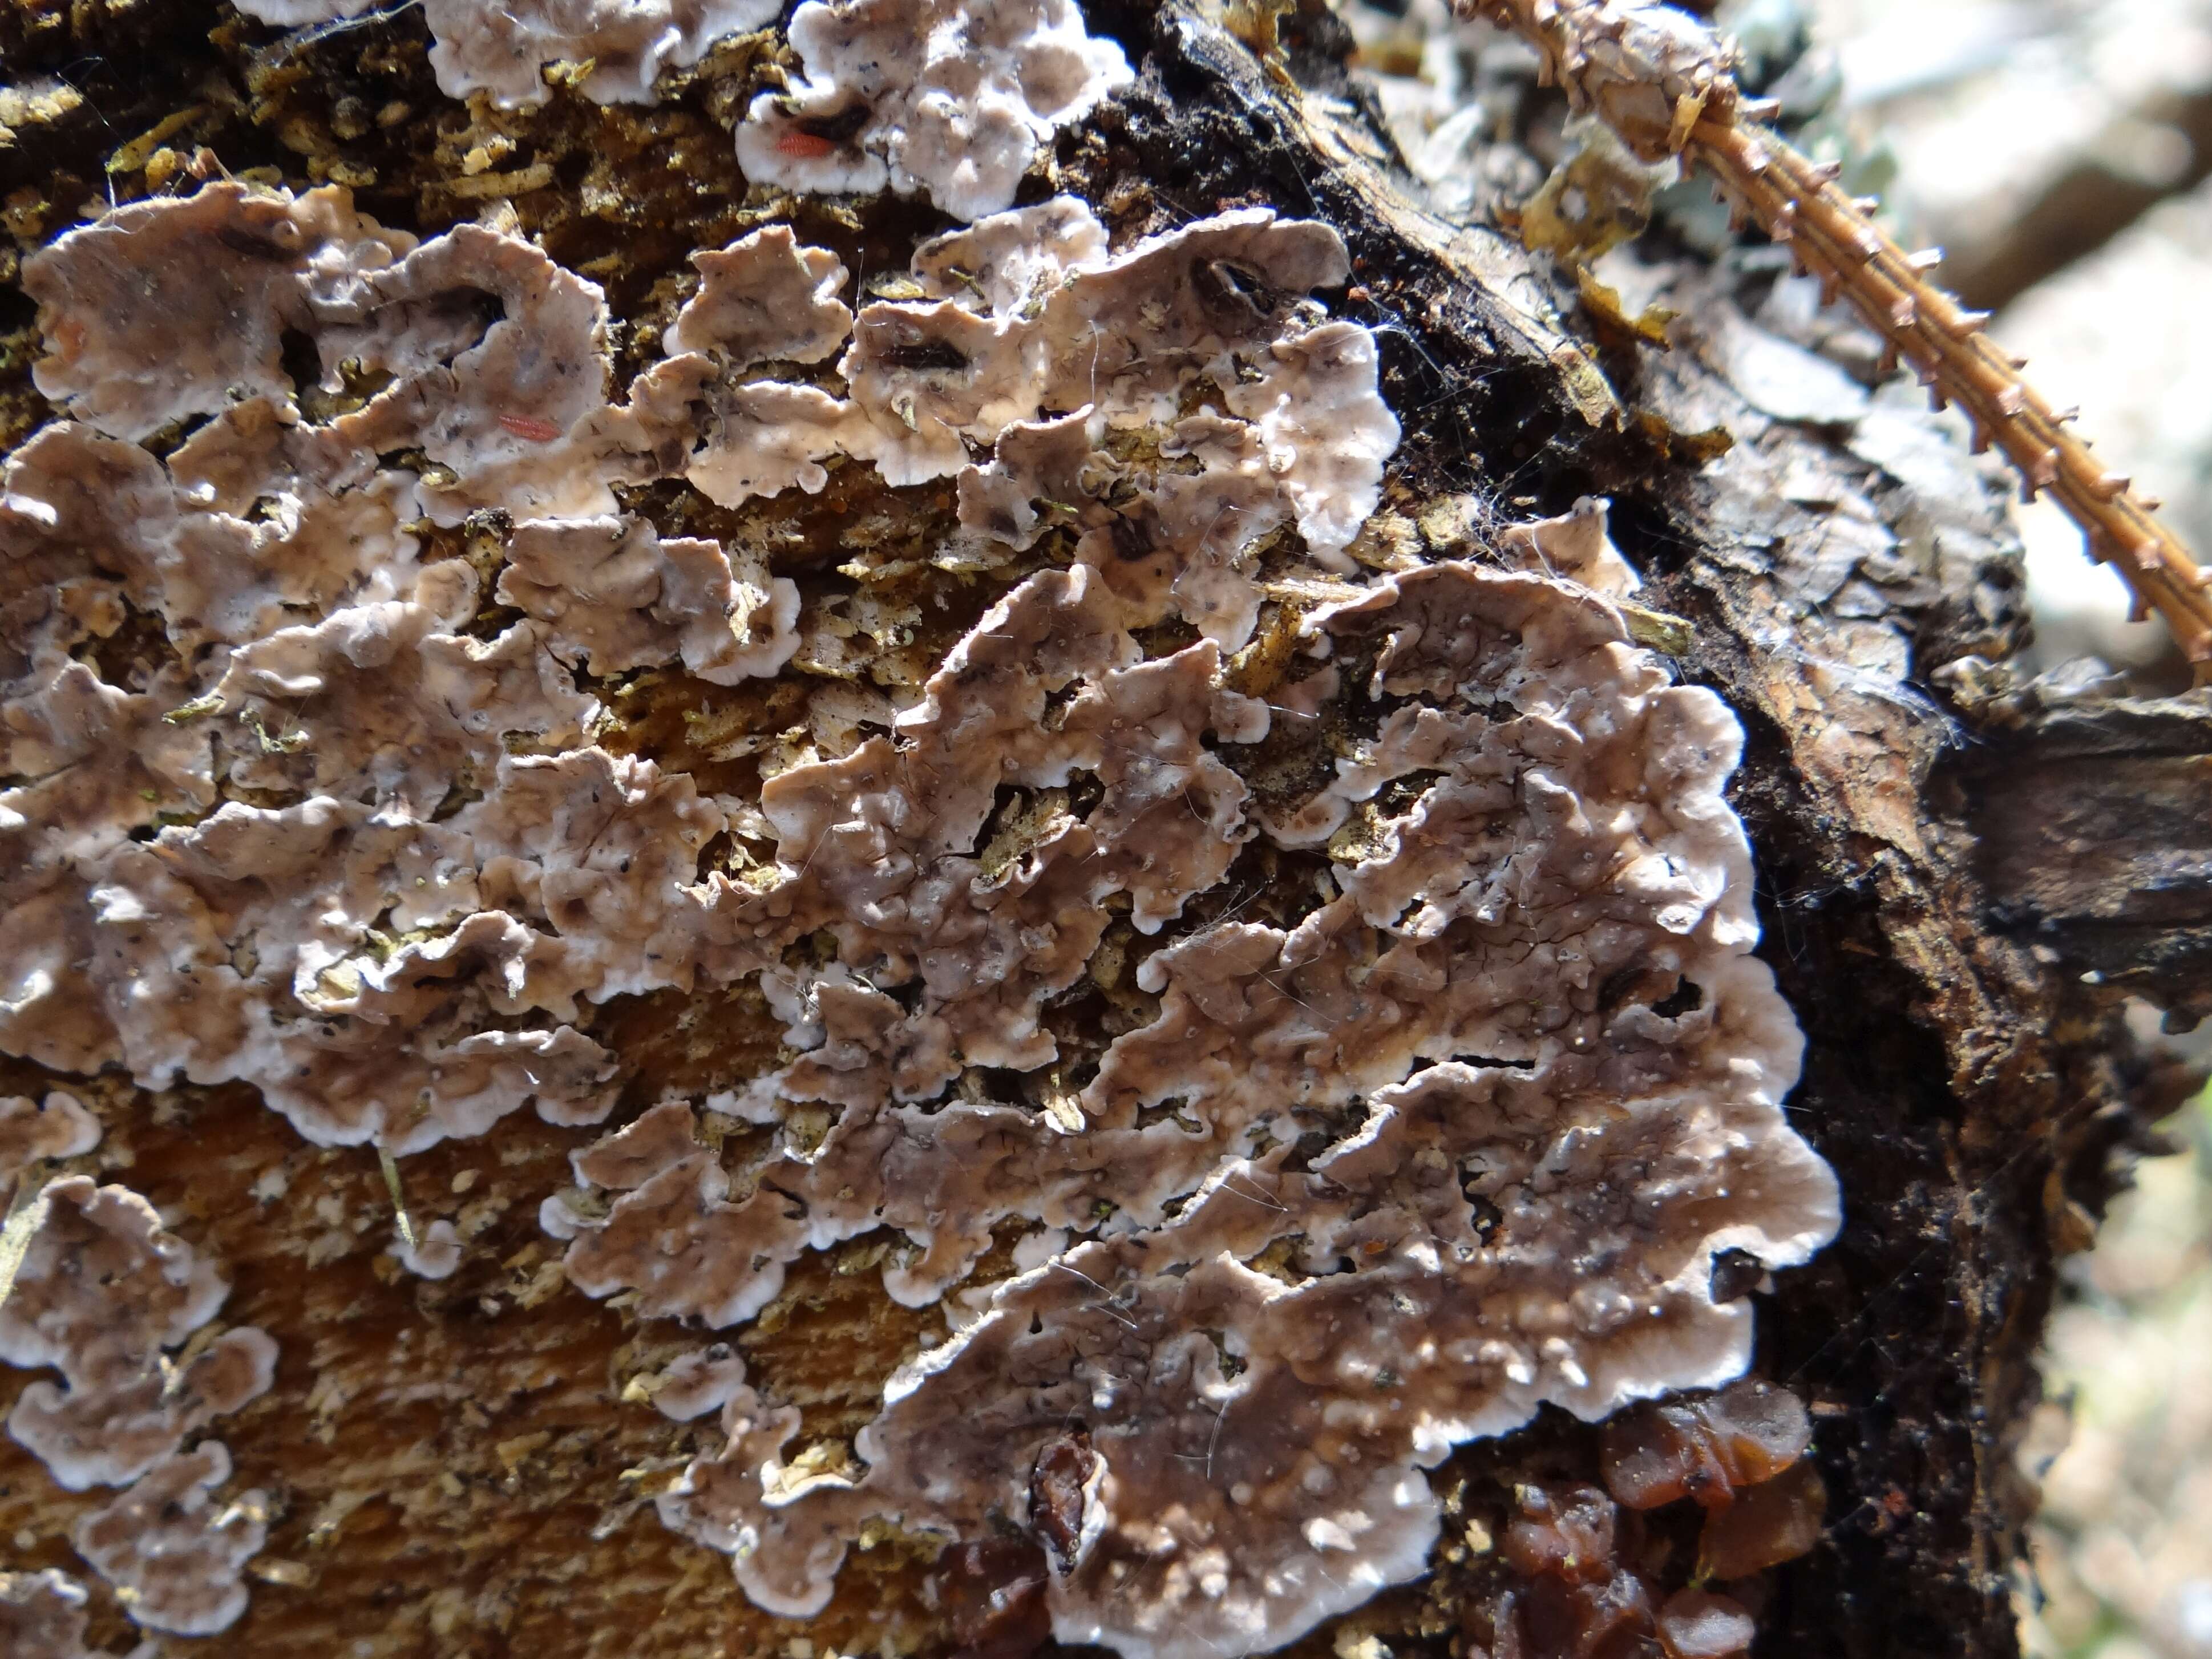 Image of White rot fungus